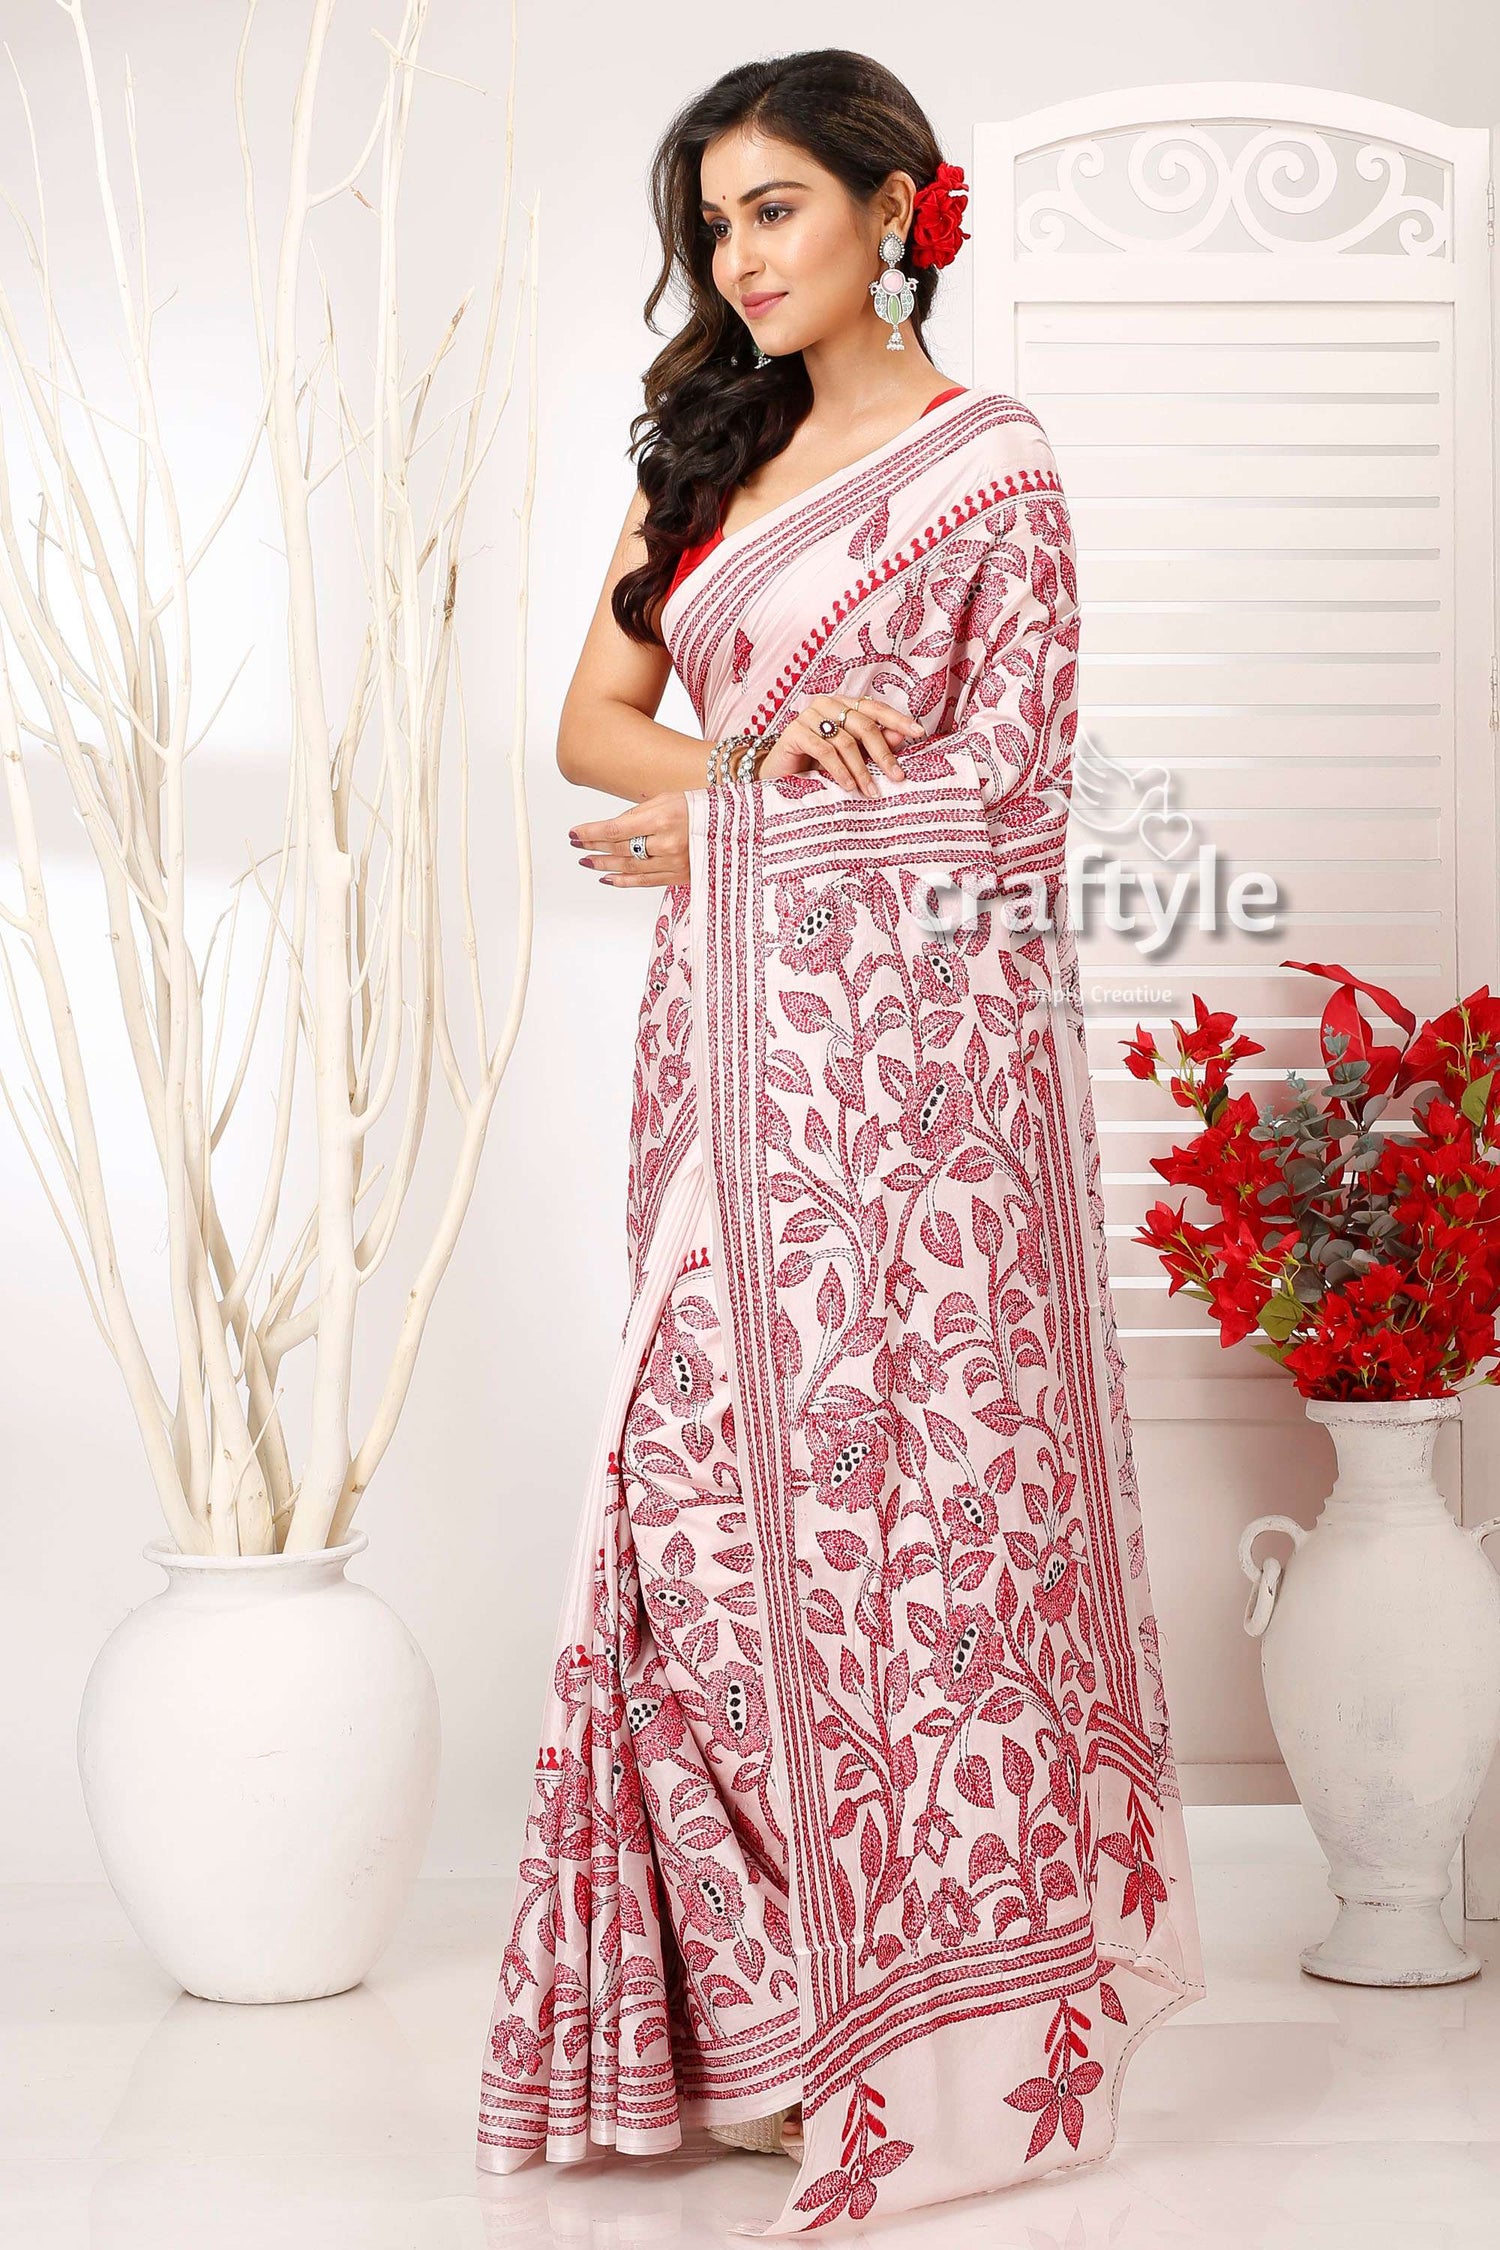 Pinkish White and Red Blossom Theme Silk Kantha Stitch Saree - Craftyle